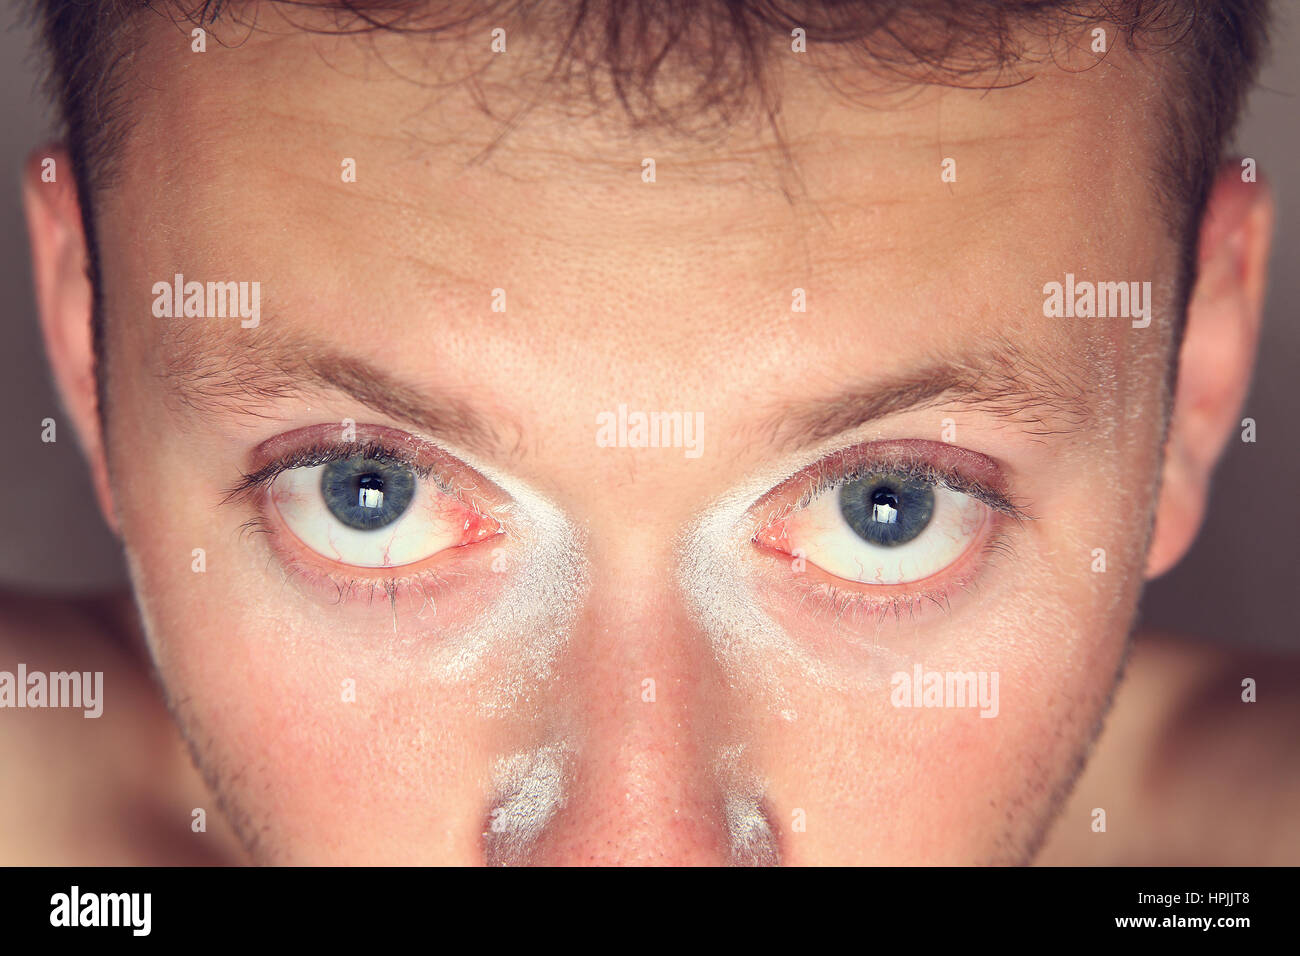 Whitewash in irritation eyes and on face skin Stock Photo